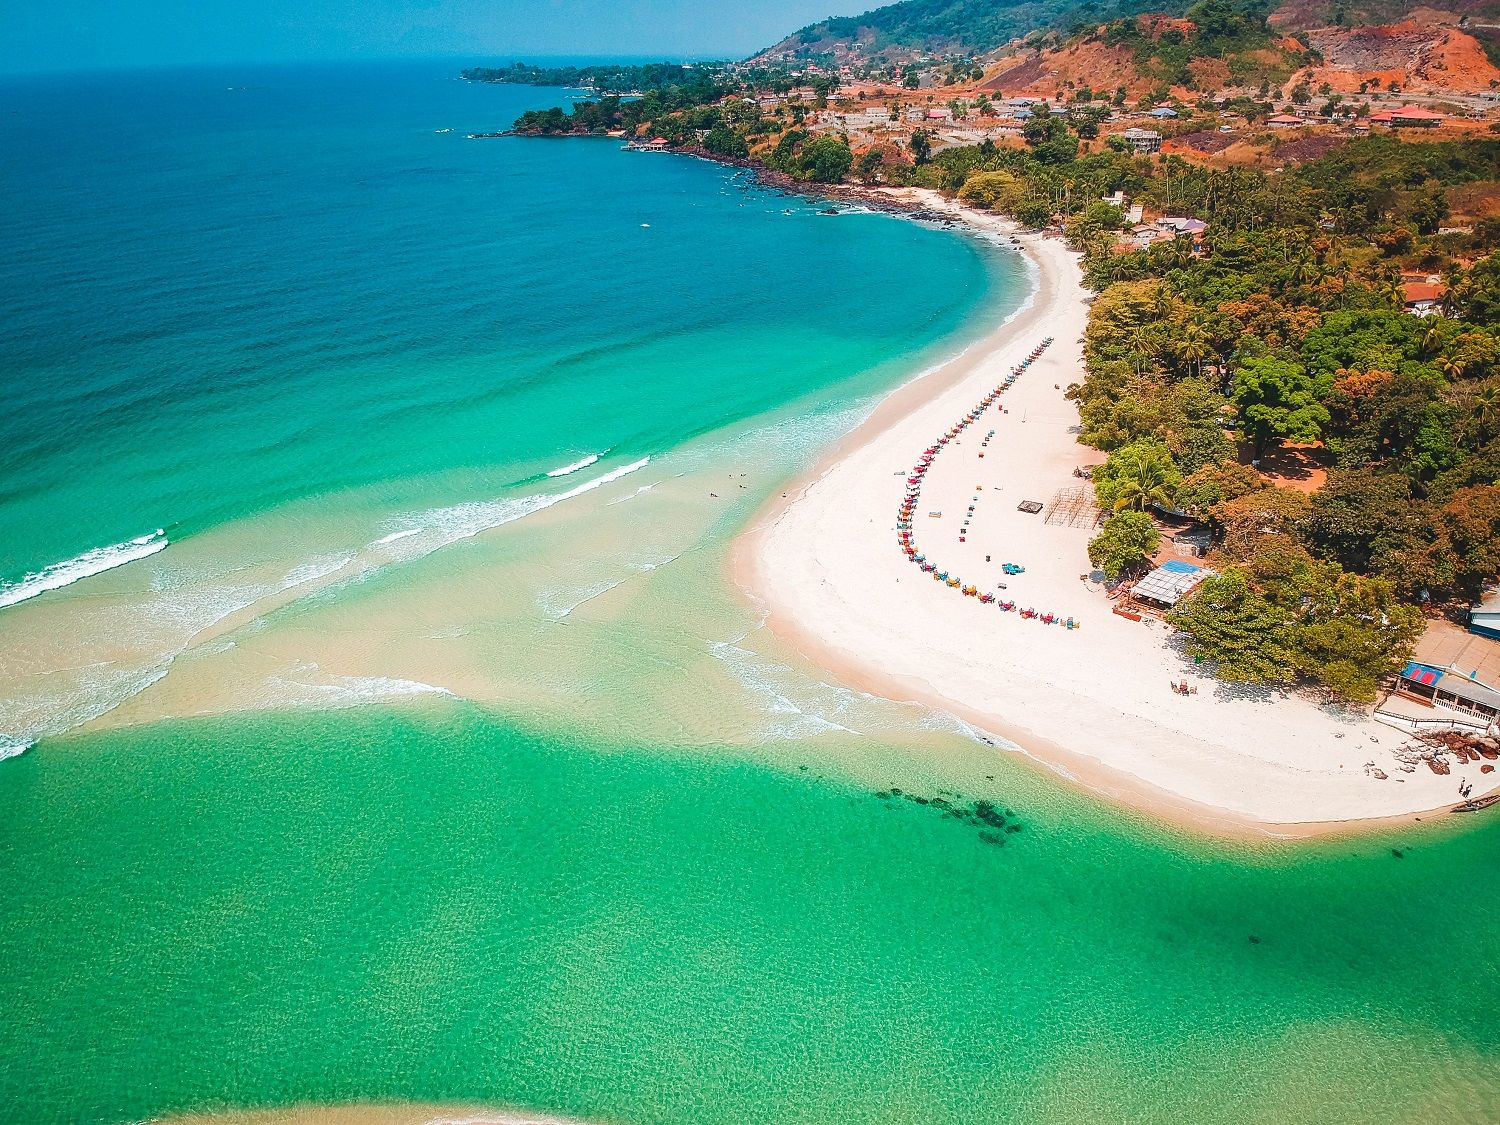 Beaches in Sierra Leone